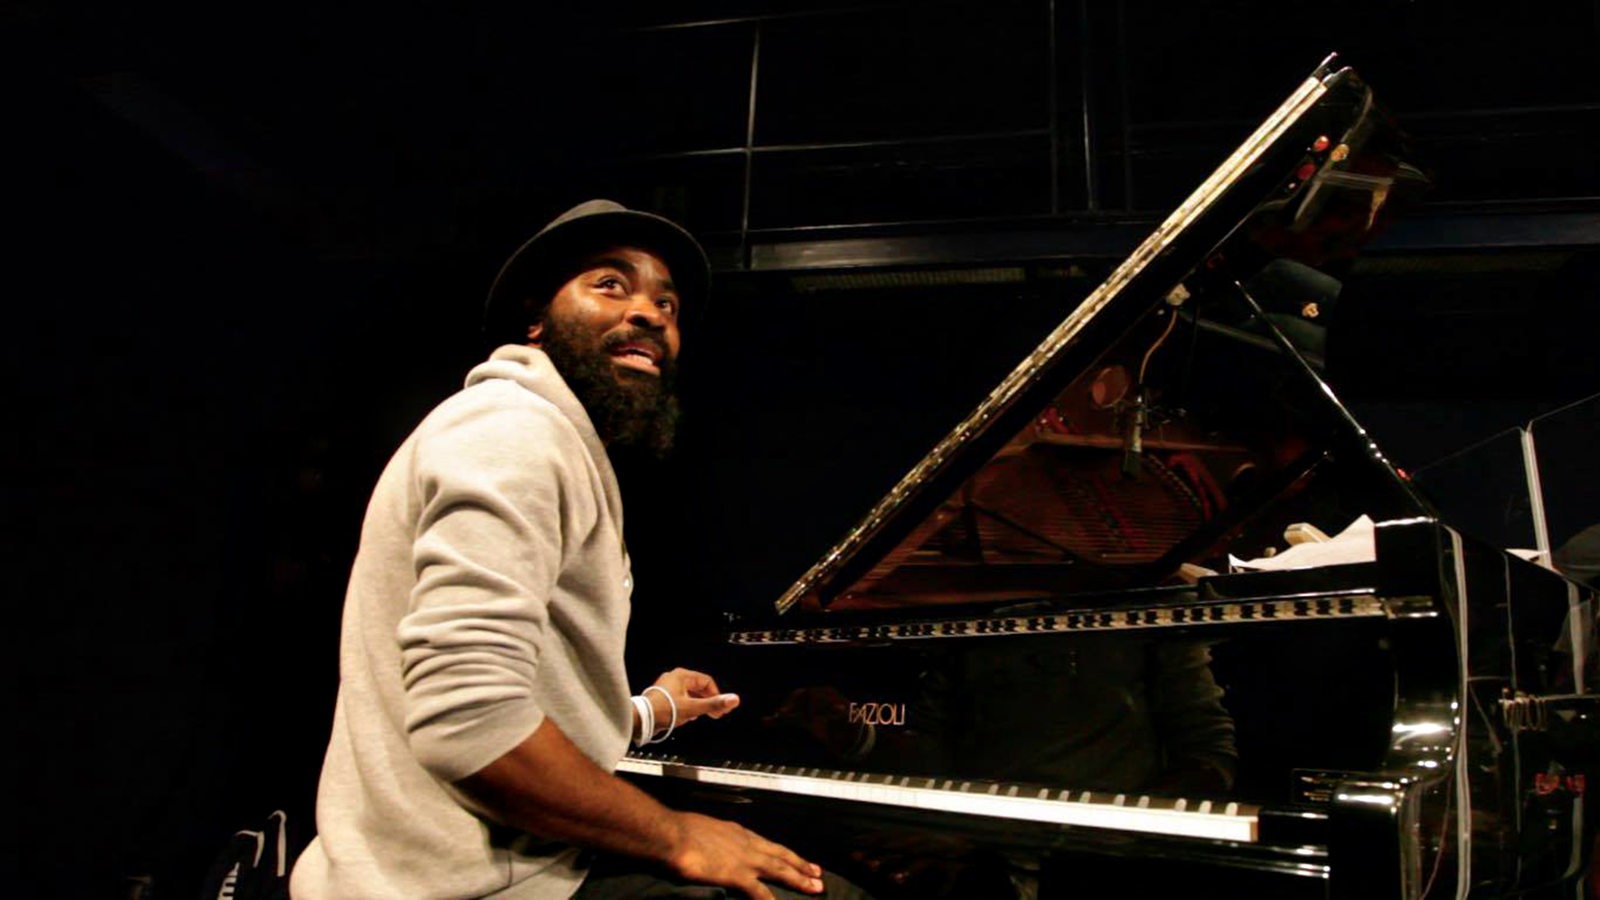 Der Jazzmusiker Nduduzo Makhathini am Klavier